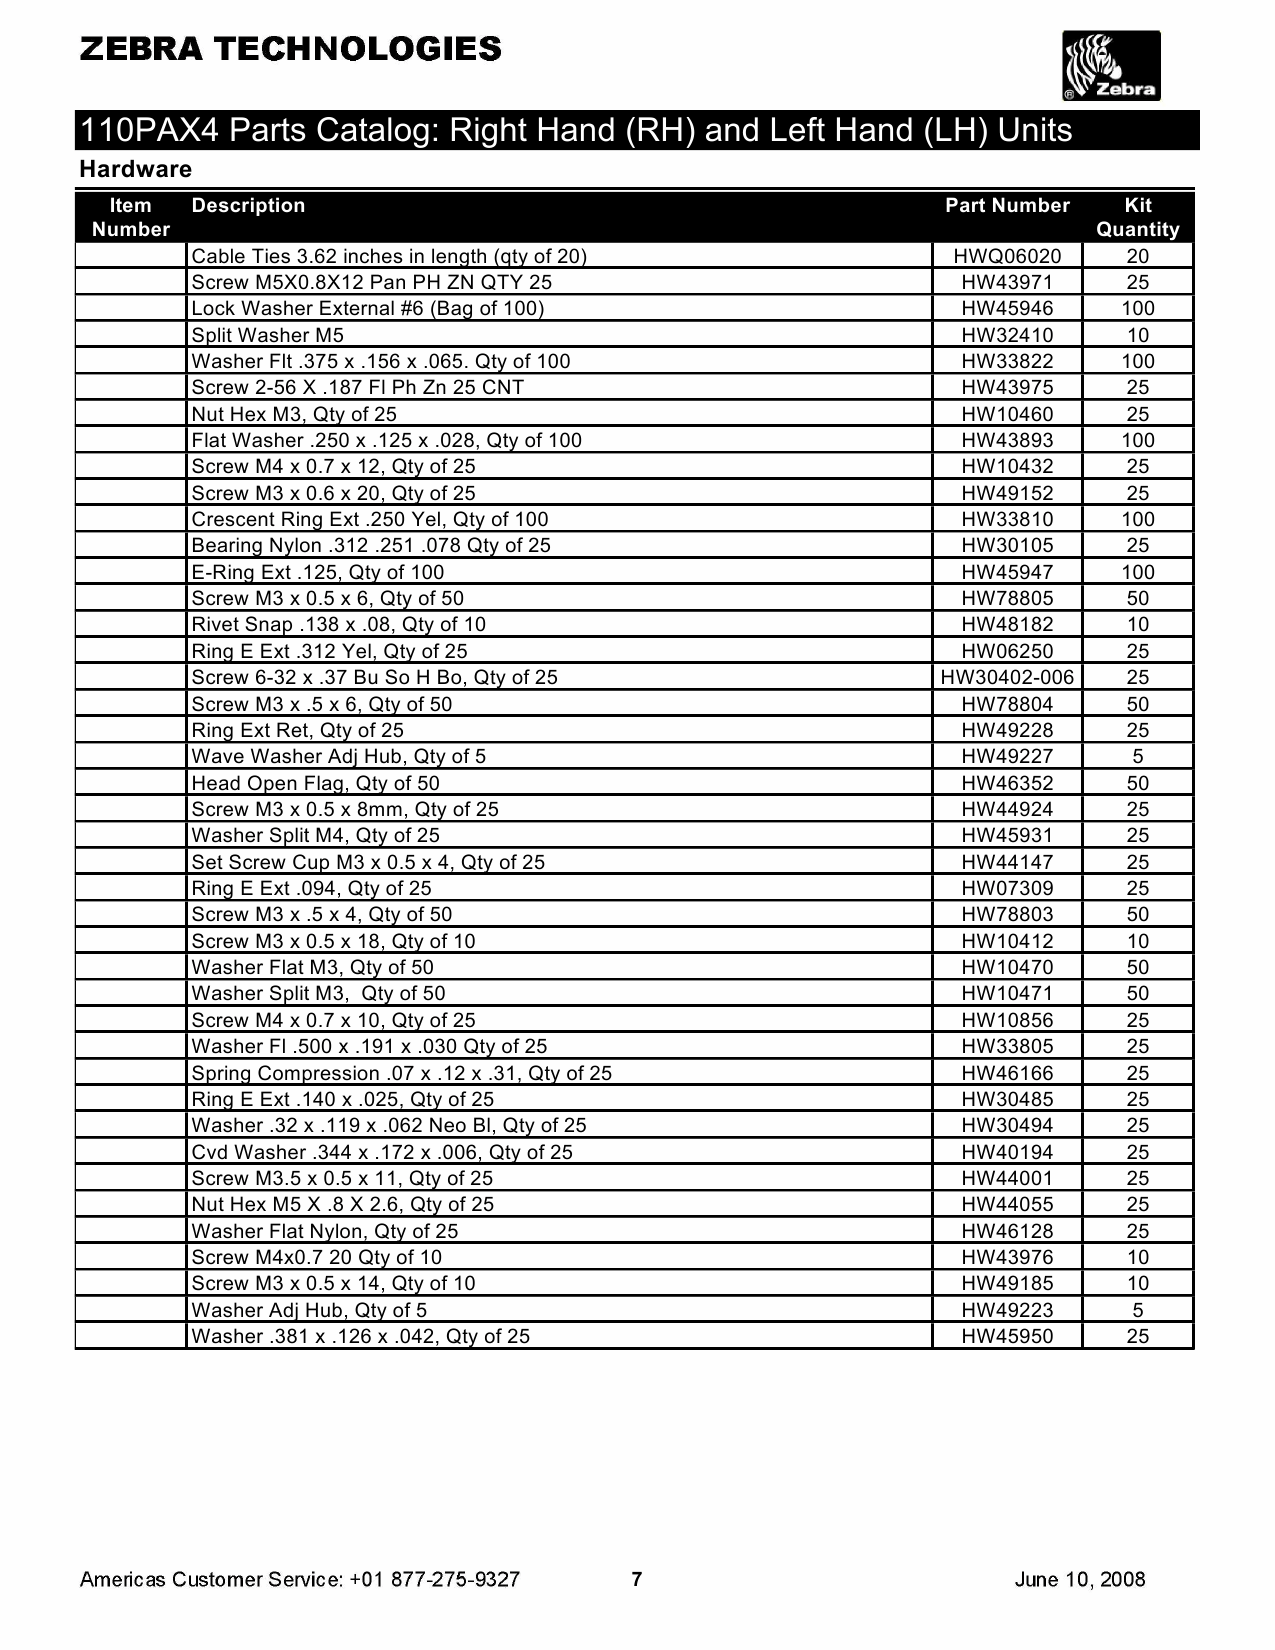 Zebra Label 110PAX4 Parts Catalog-6